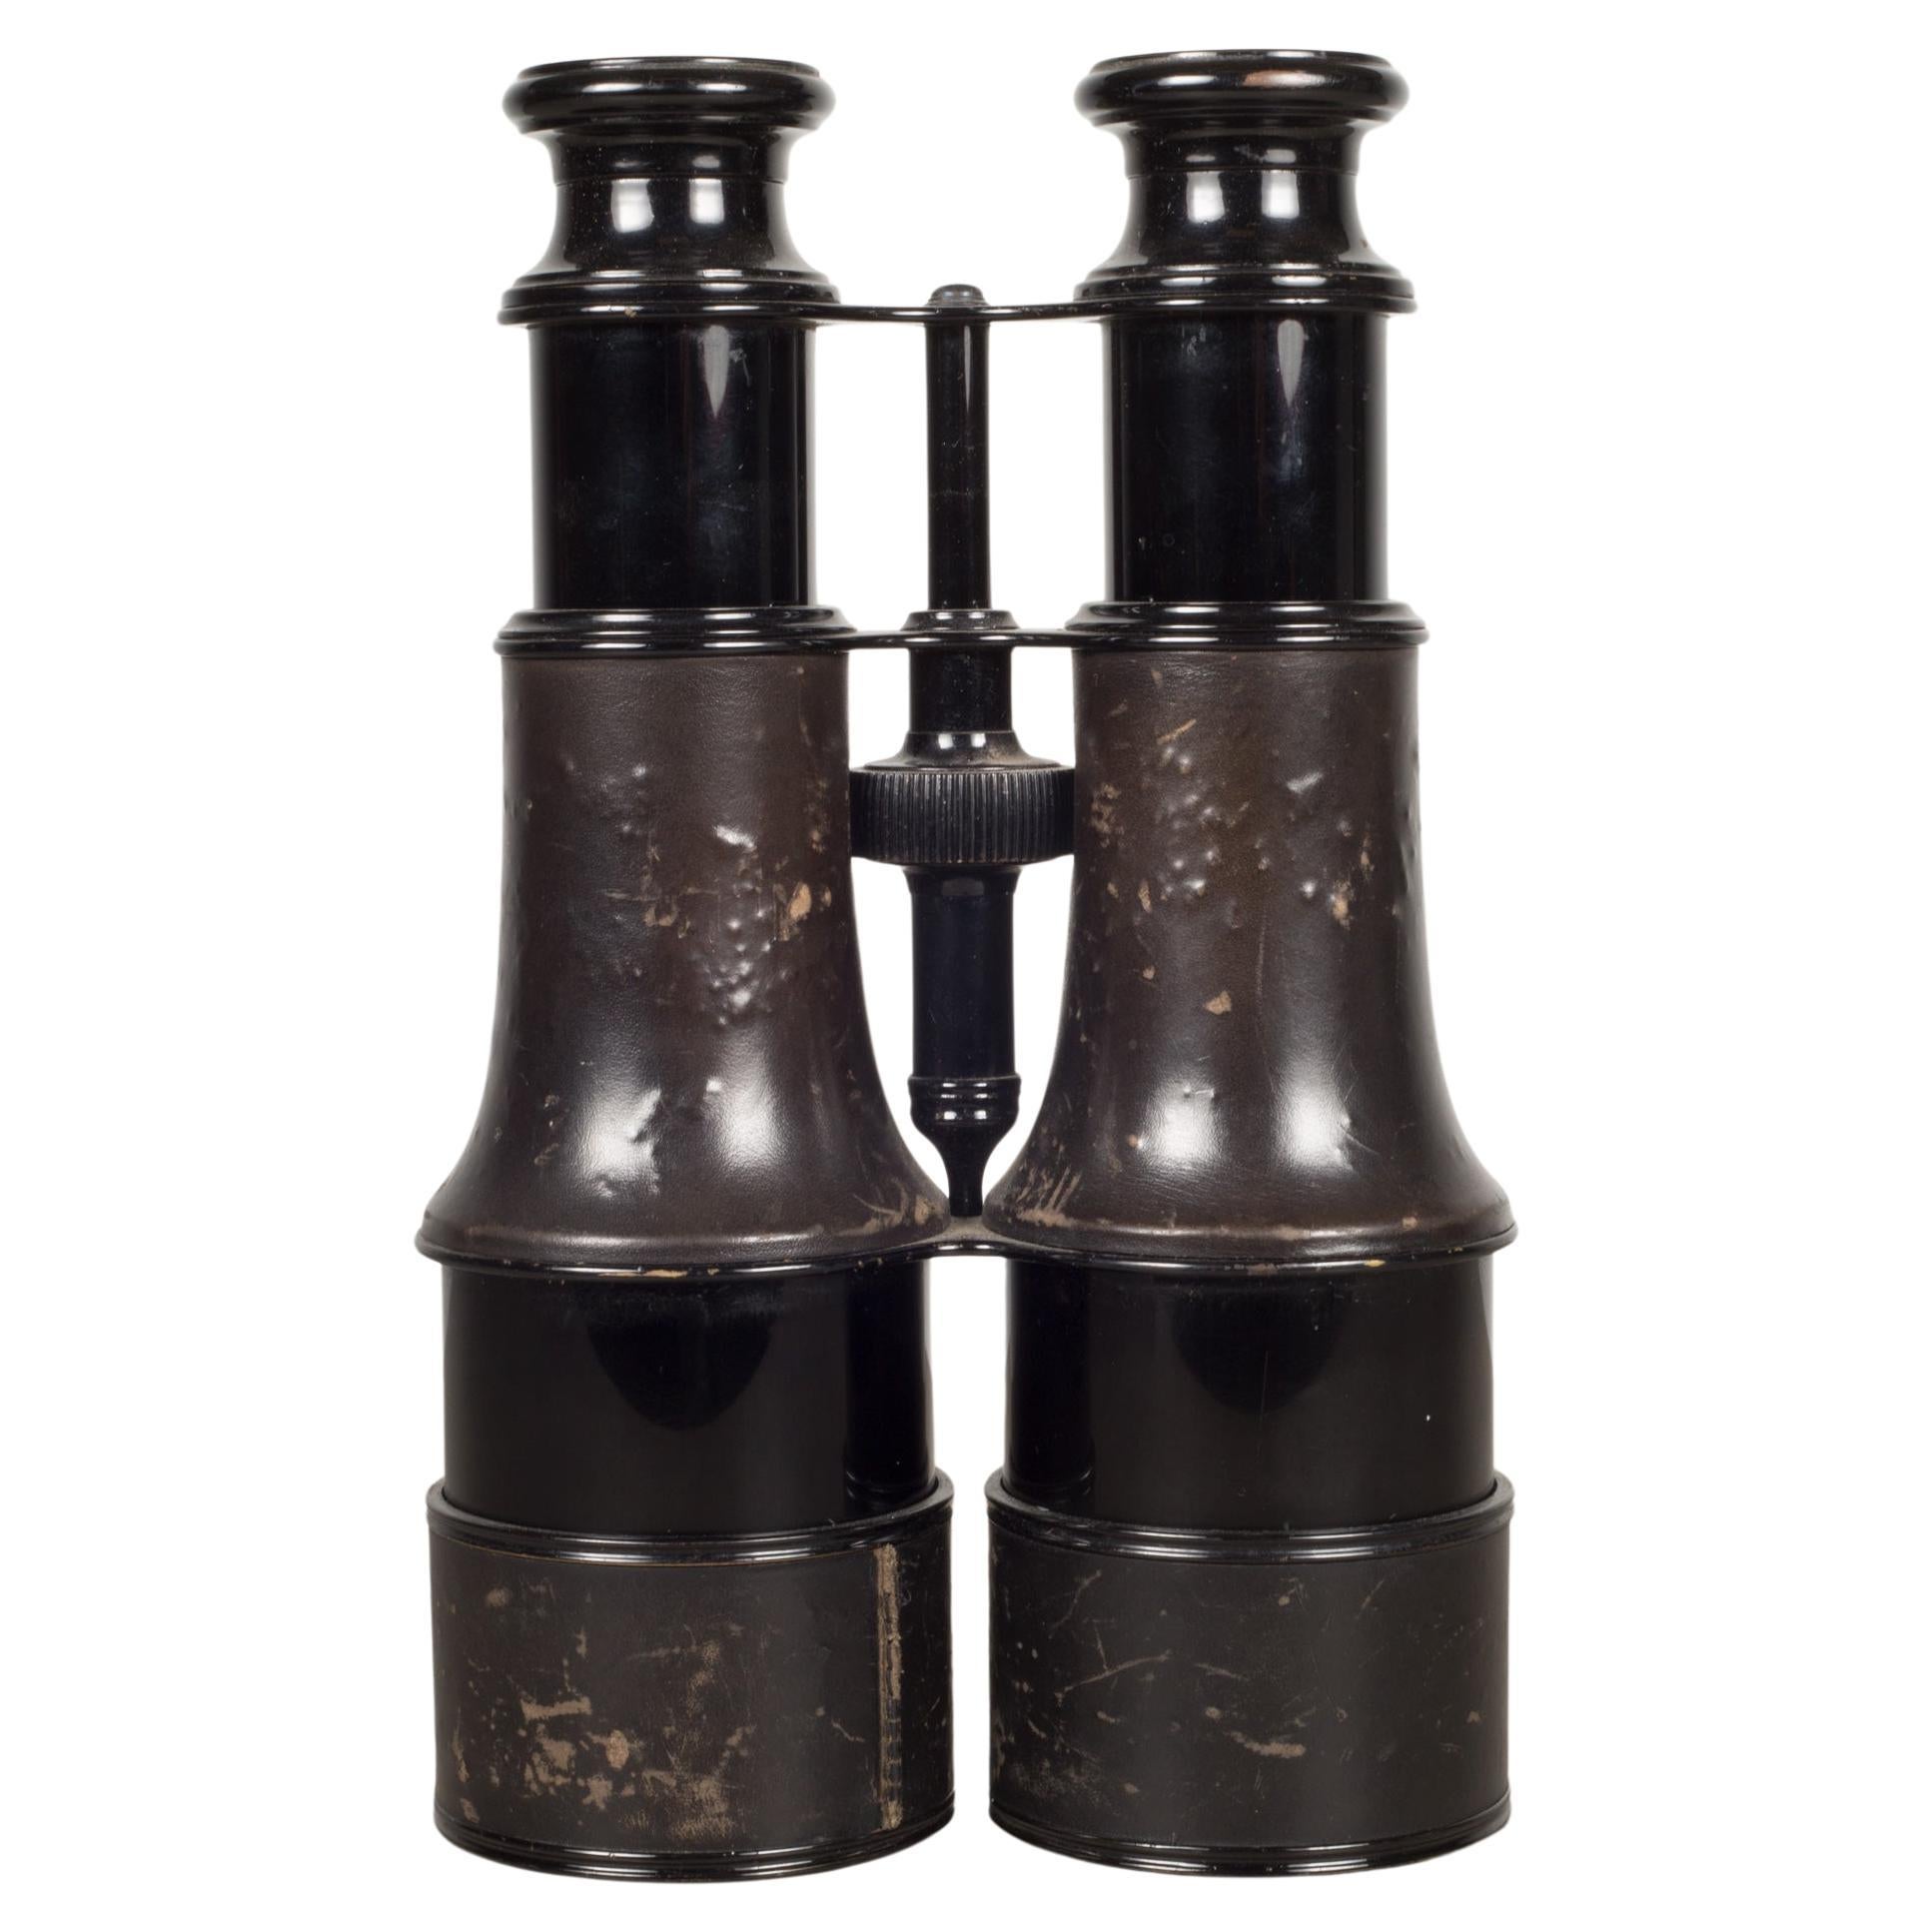 19th C. Leather Wrapped "LeMaire Fabt Paris" Binoculars c.1880